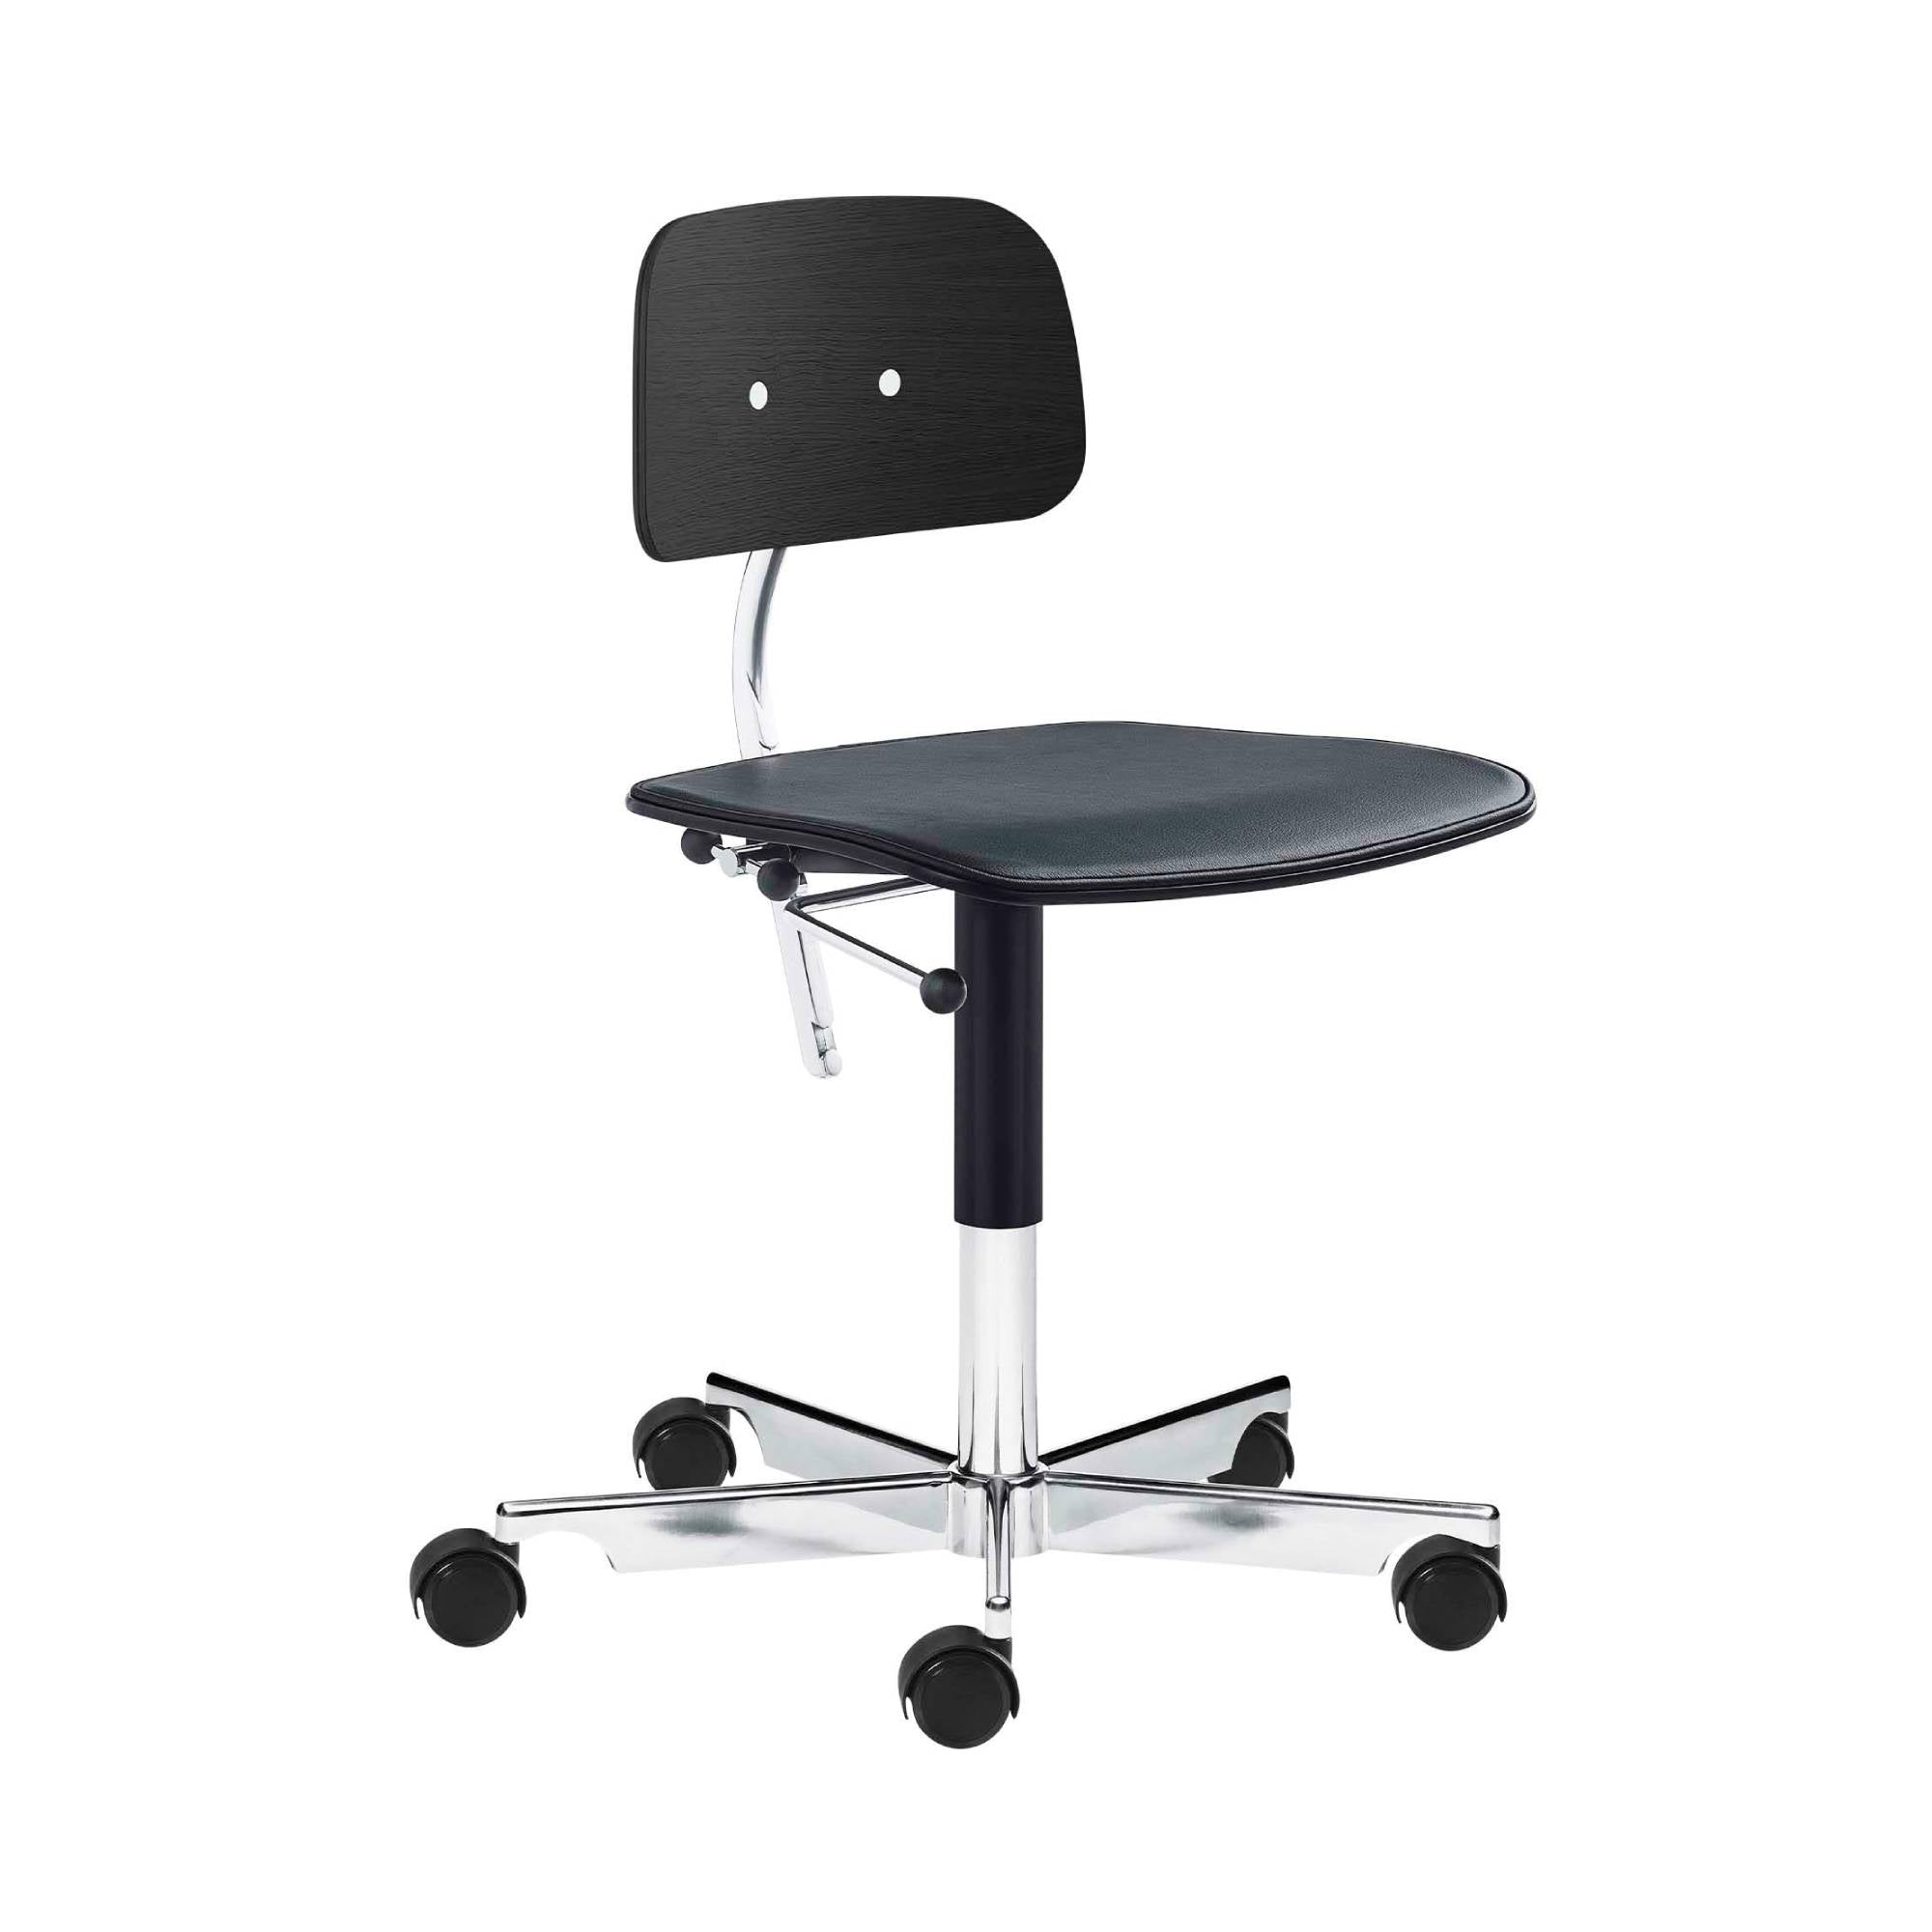 Kevi 2533 Chair: Size B + Seat Upholstered + Lazure - Black